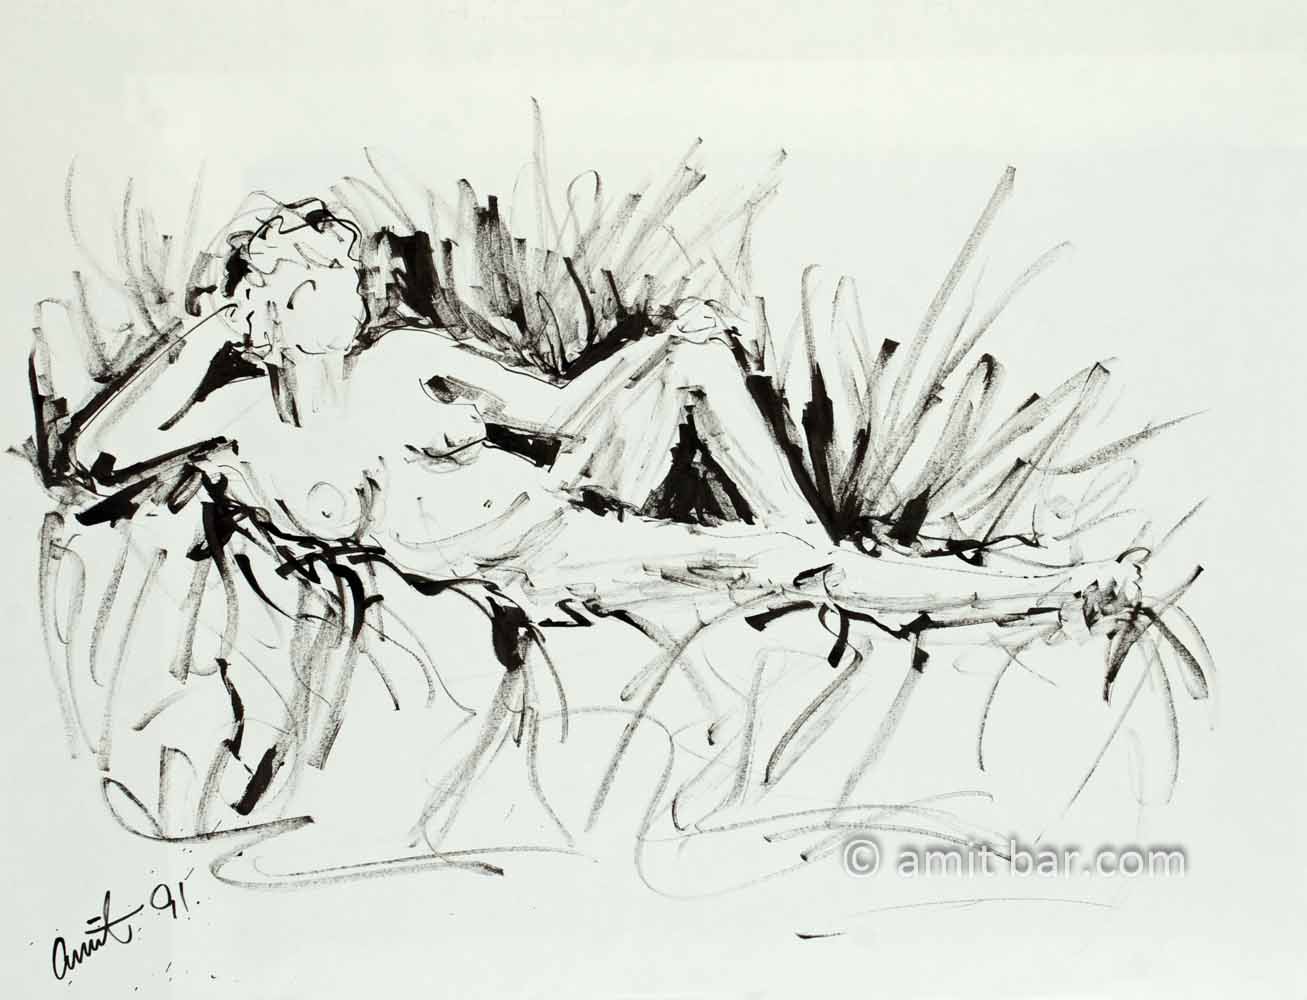 Expressive nude I: Nude figure in ink